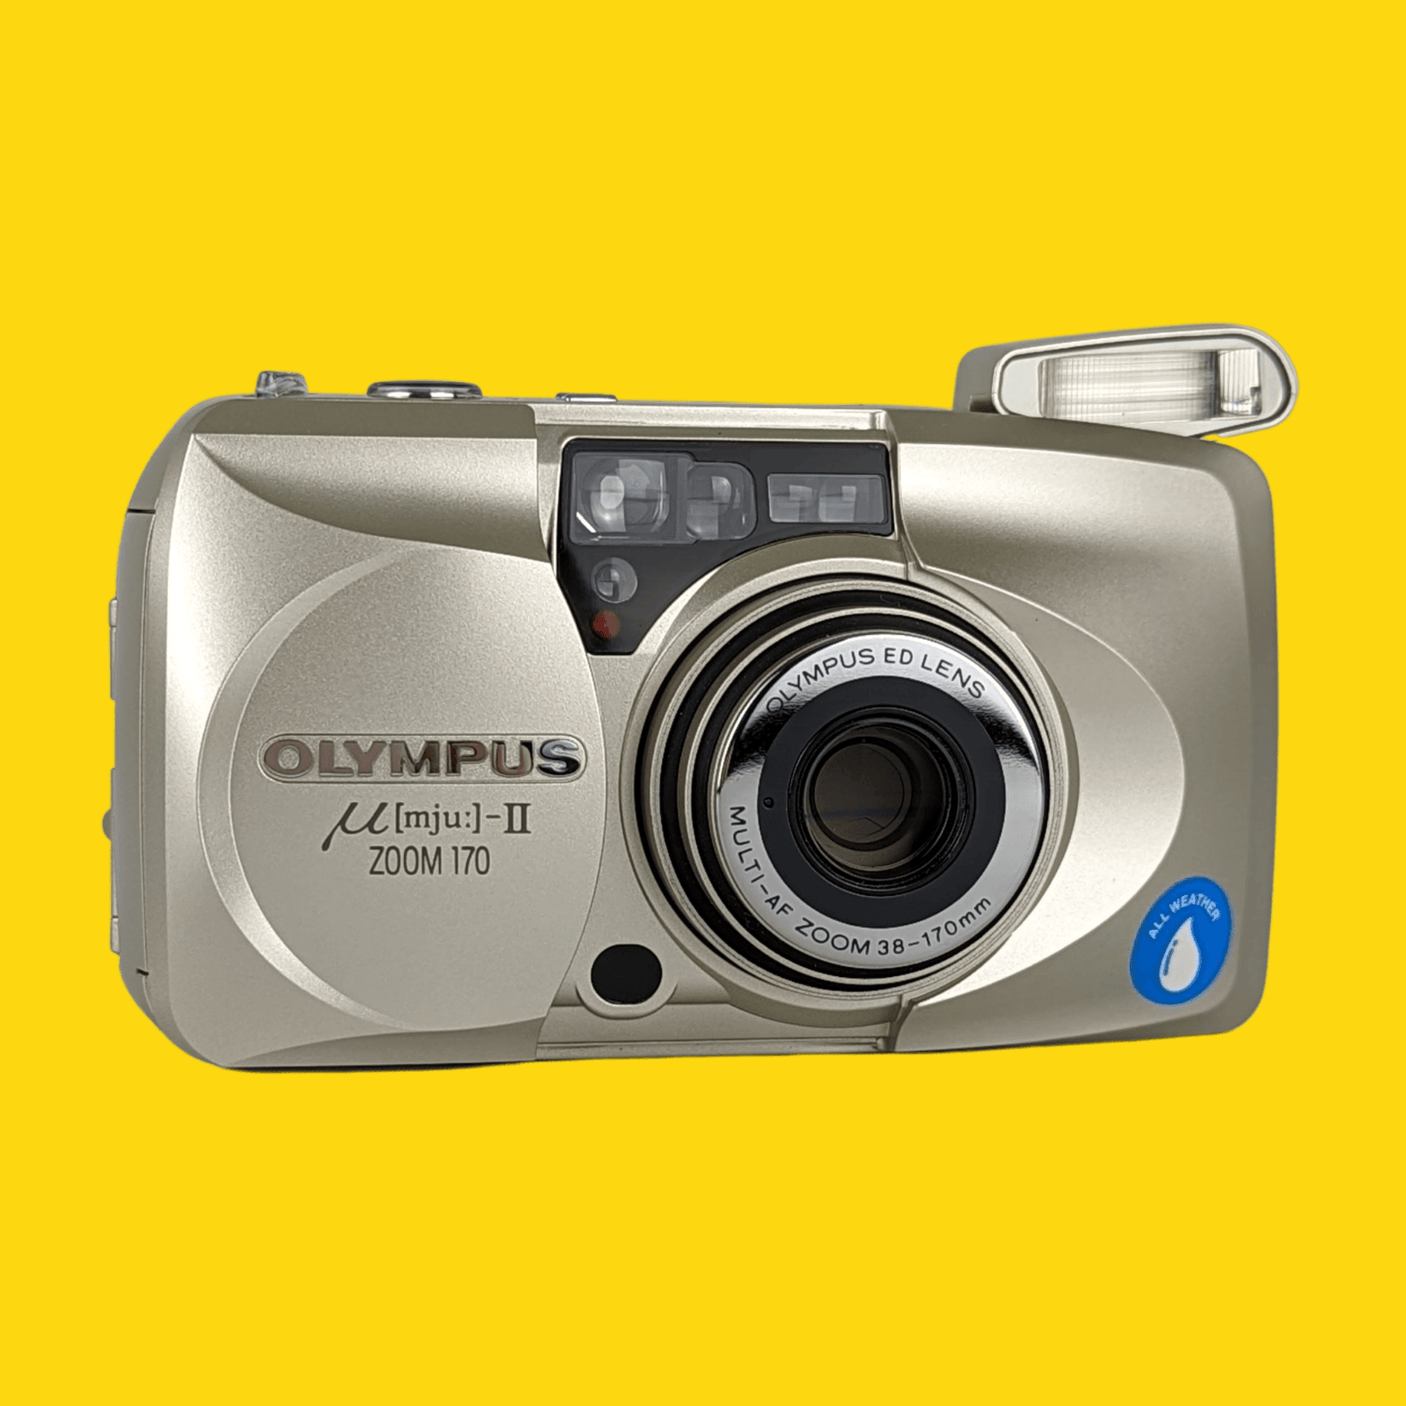 BRAND NEW - Olympus Mju II Zoom 170 35mm Film Camera Point and Shoot